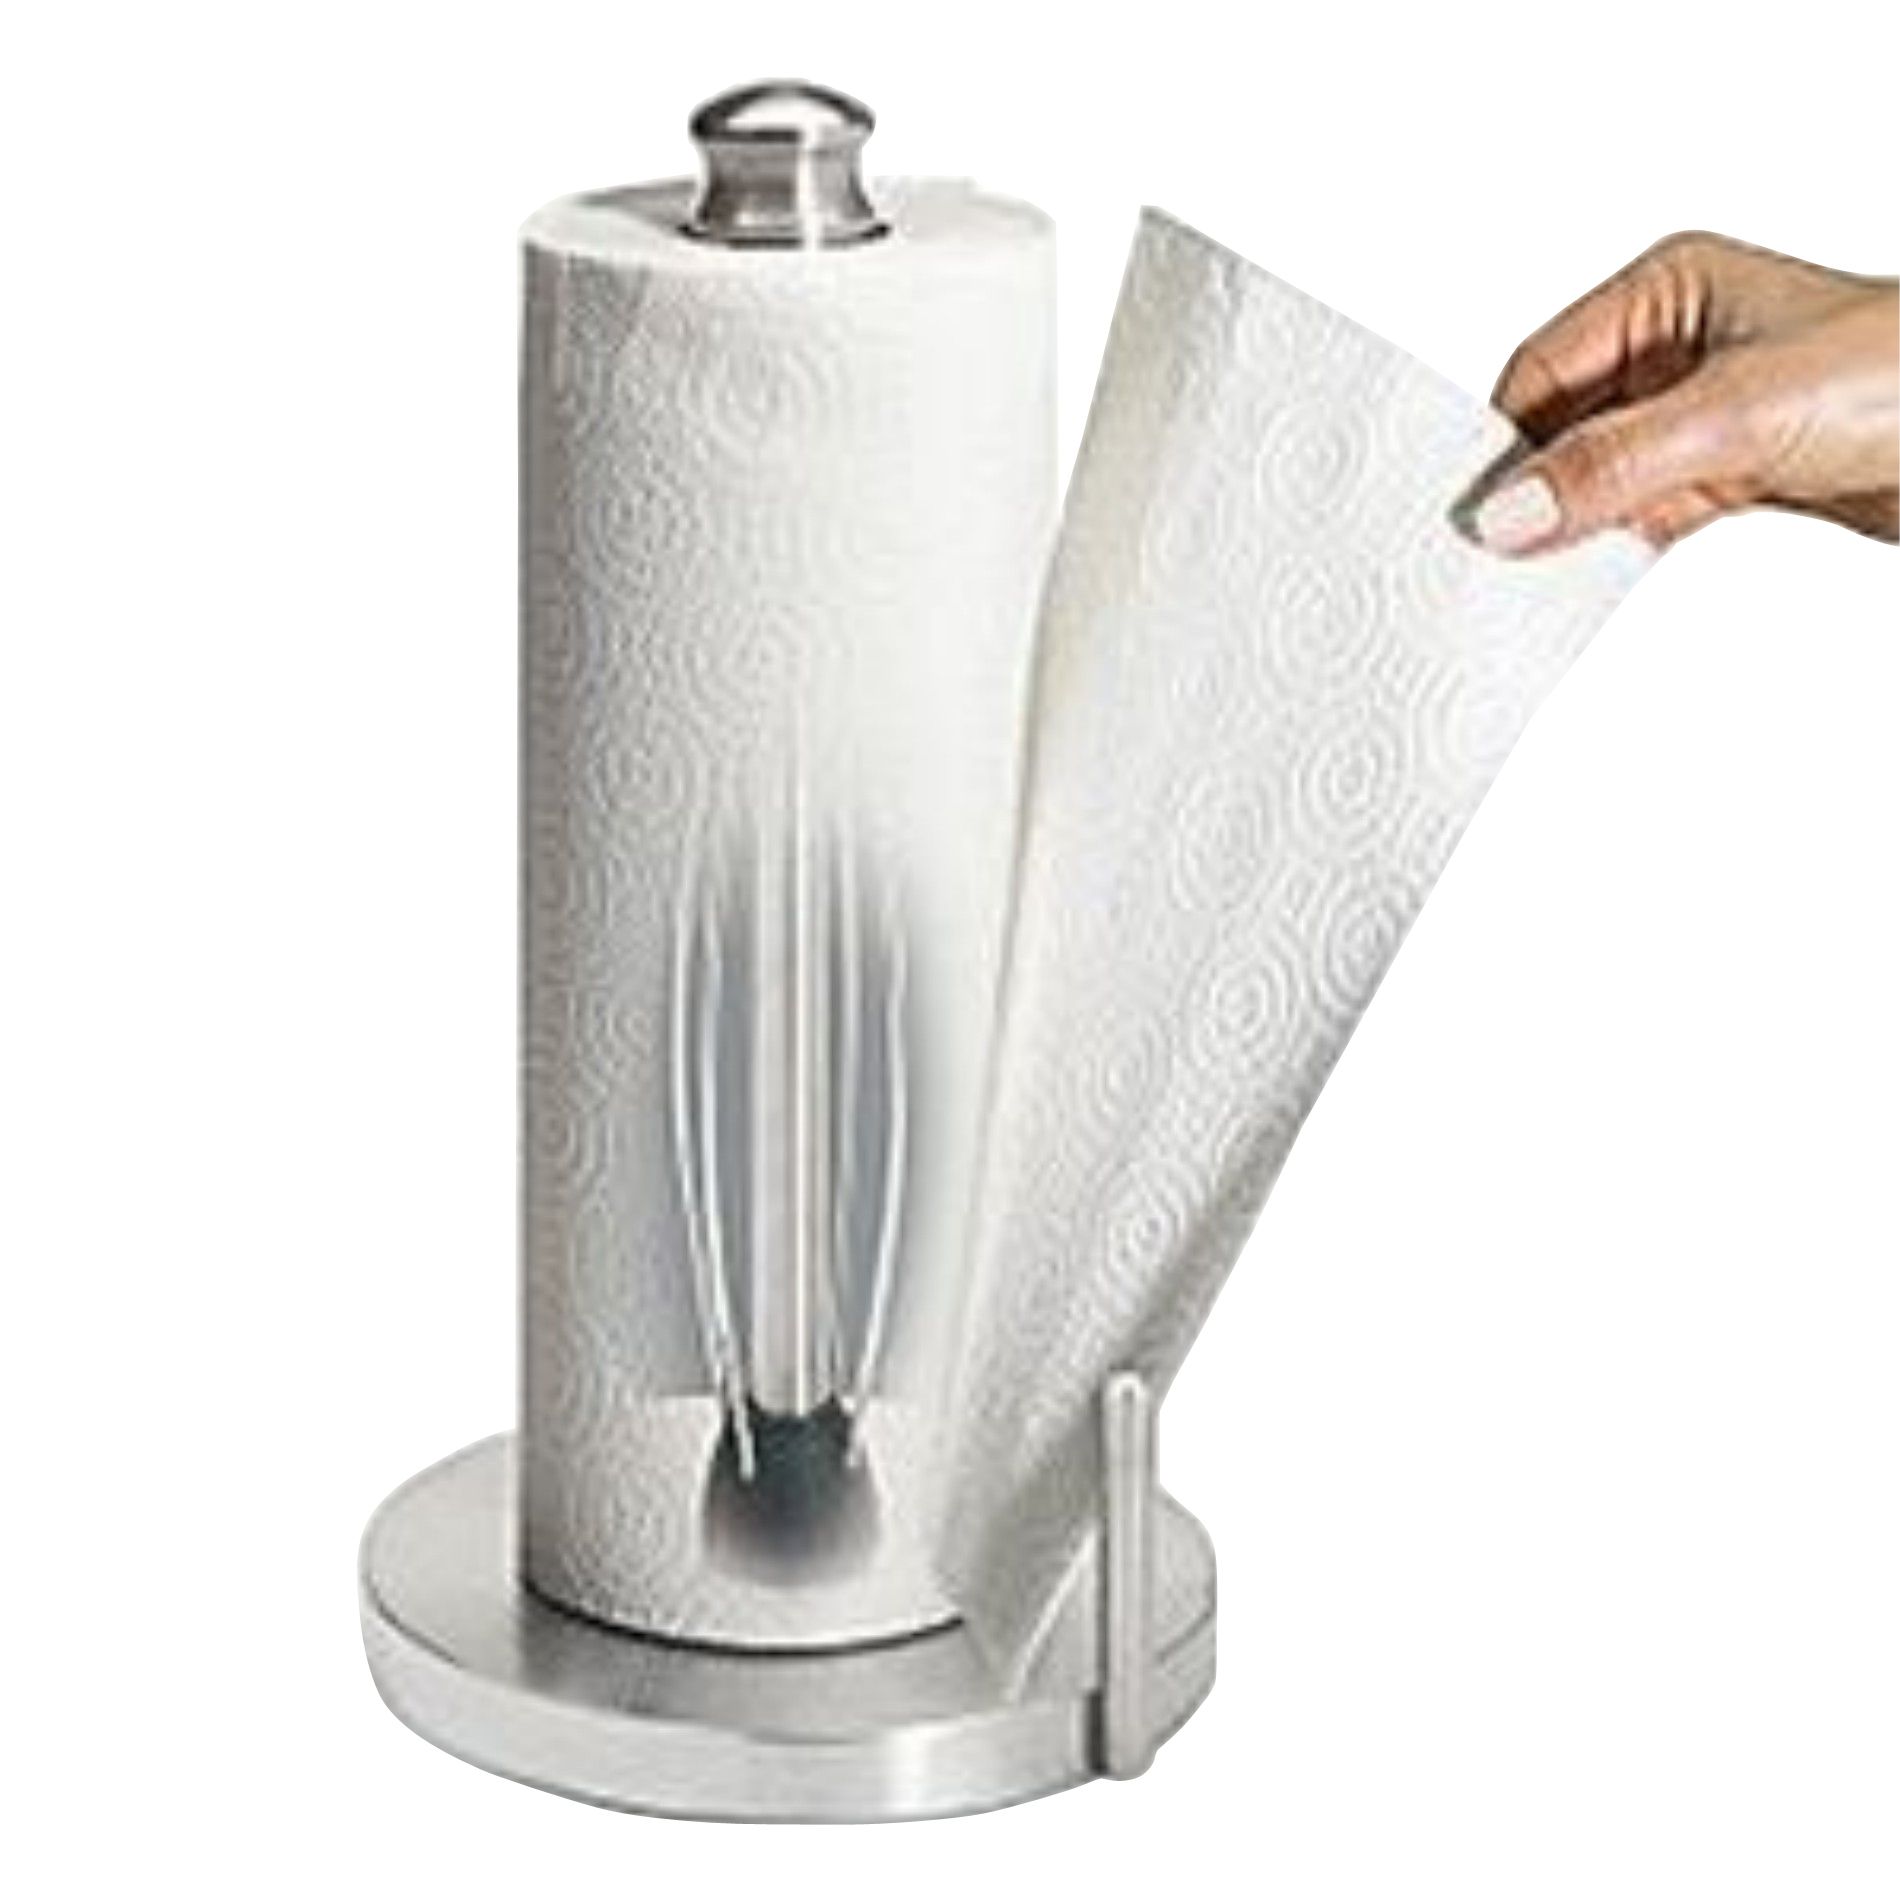 Kamenstein Brushed Stainless Steel Paper Towel Holder